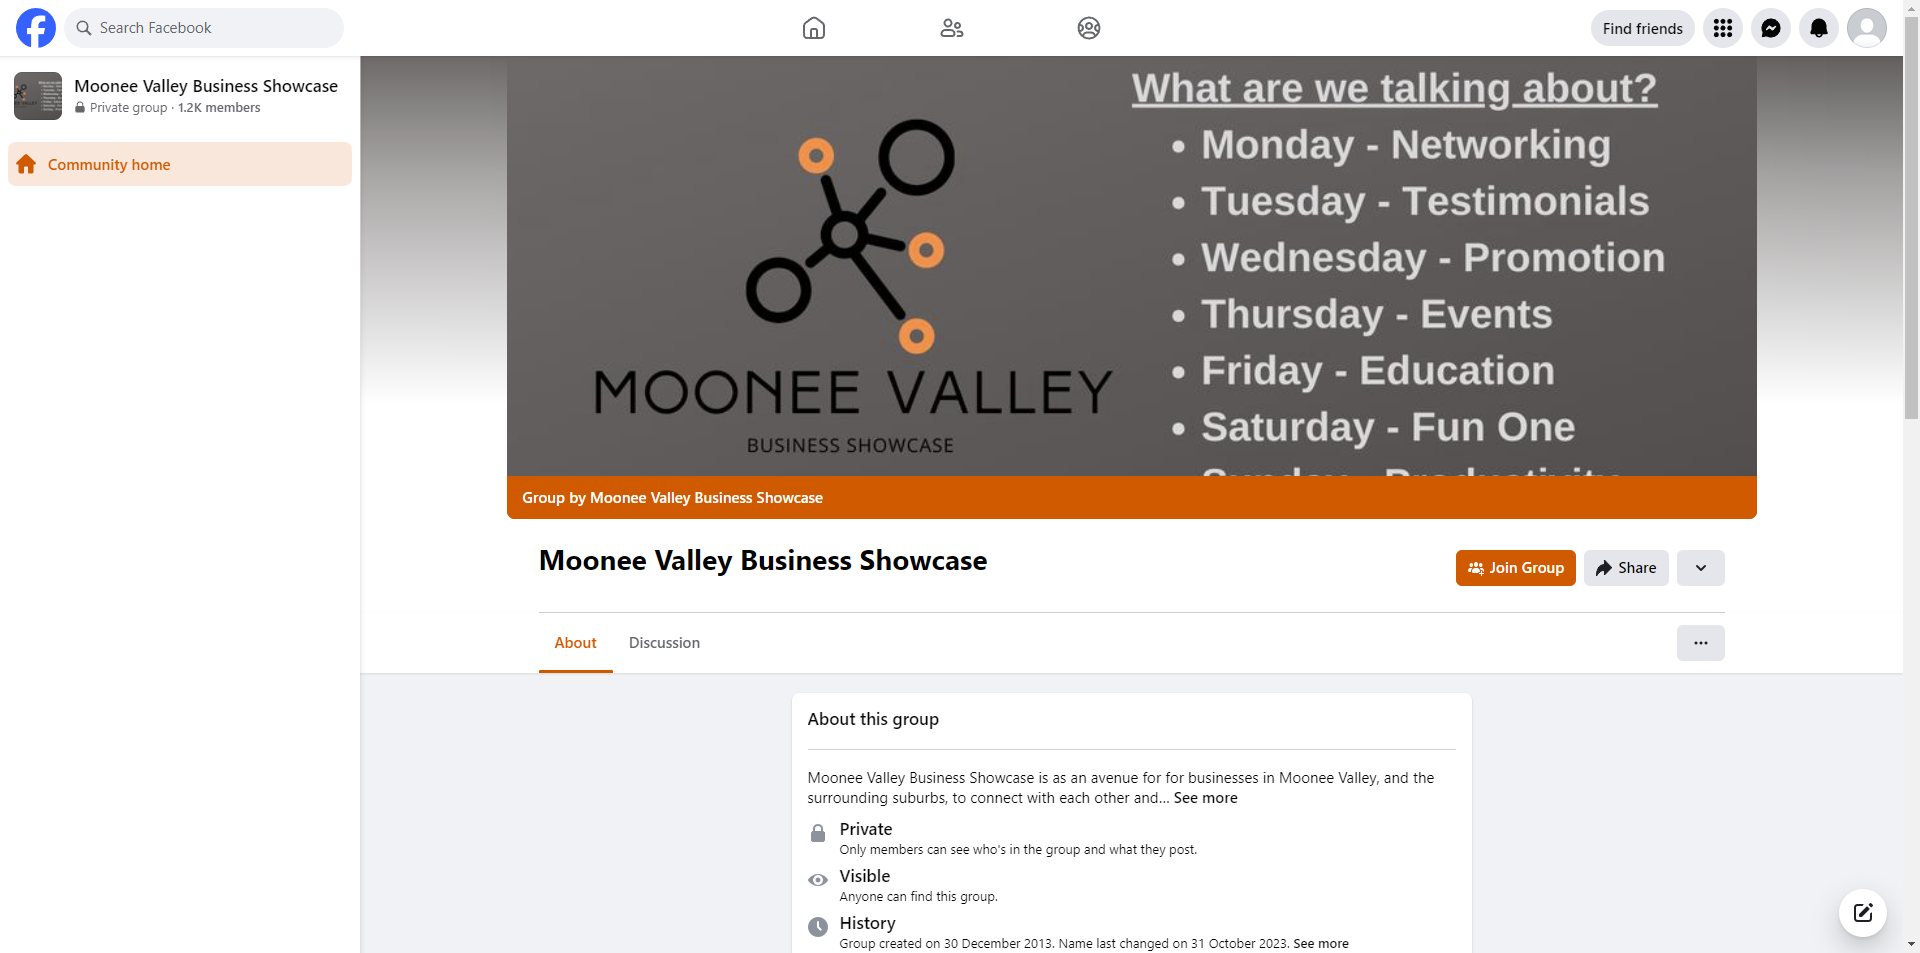 Mooney Valley Business Showcase